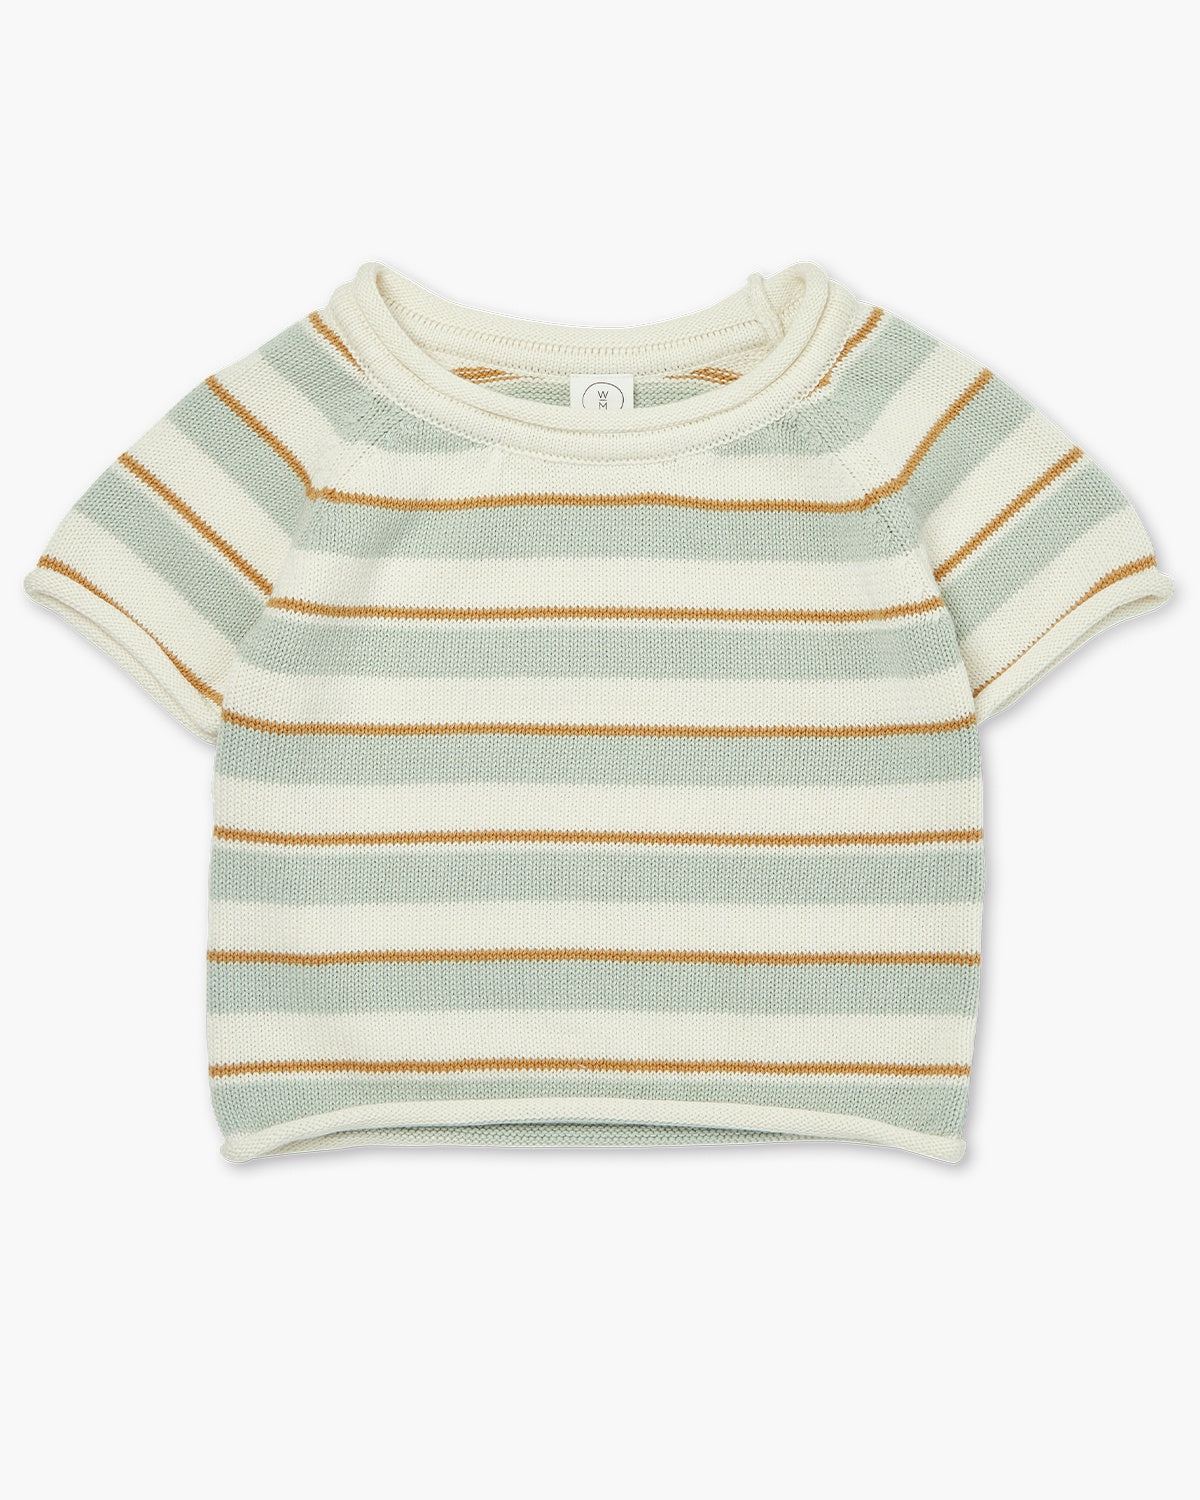 Walnut Baby - Beau Knit T-shirt - Sage Stripe